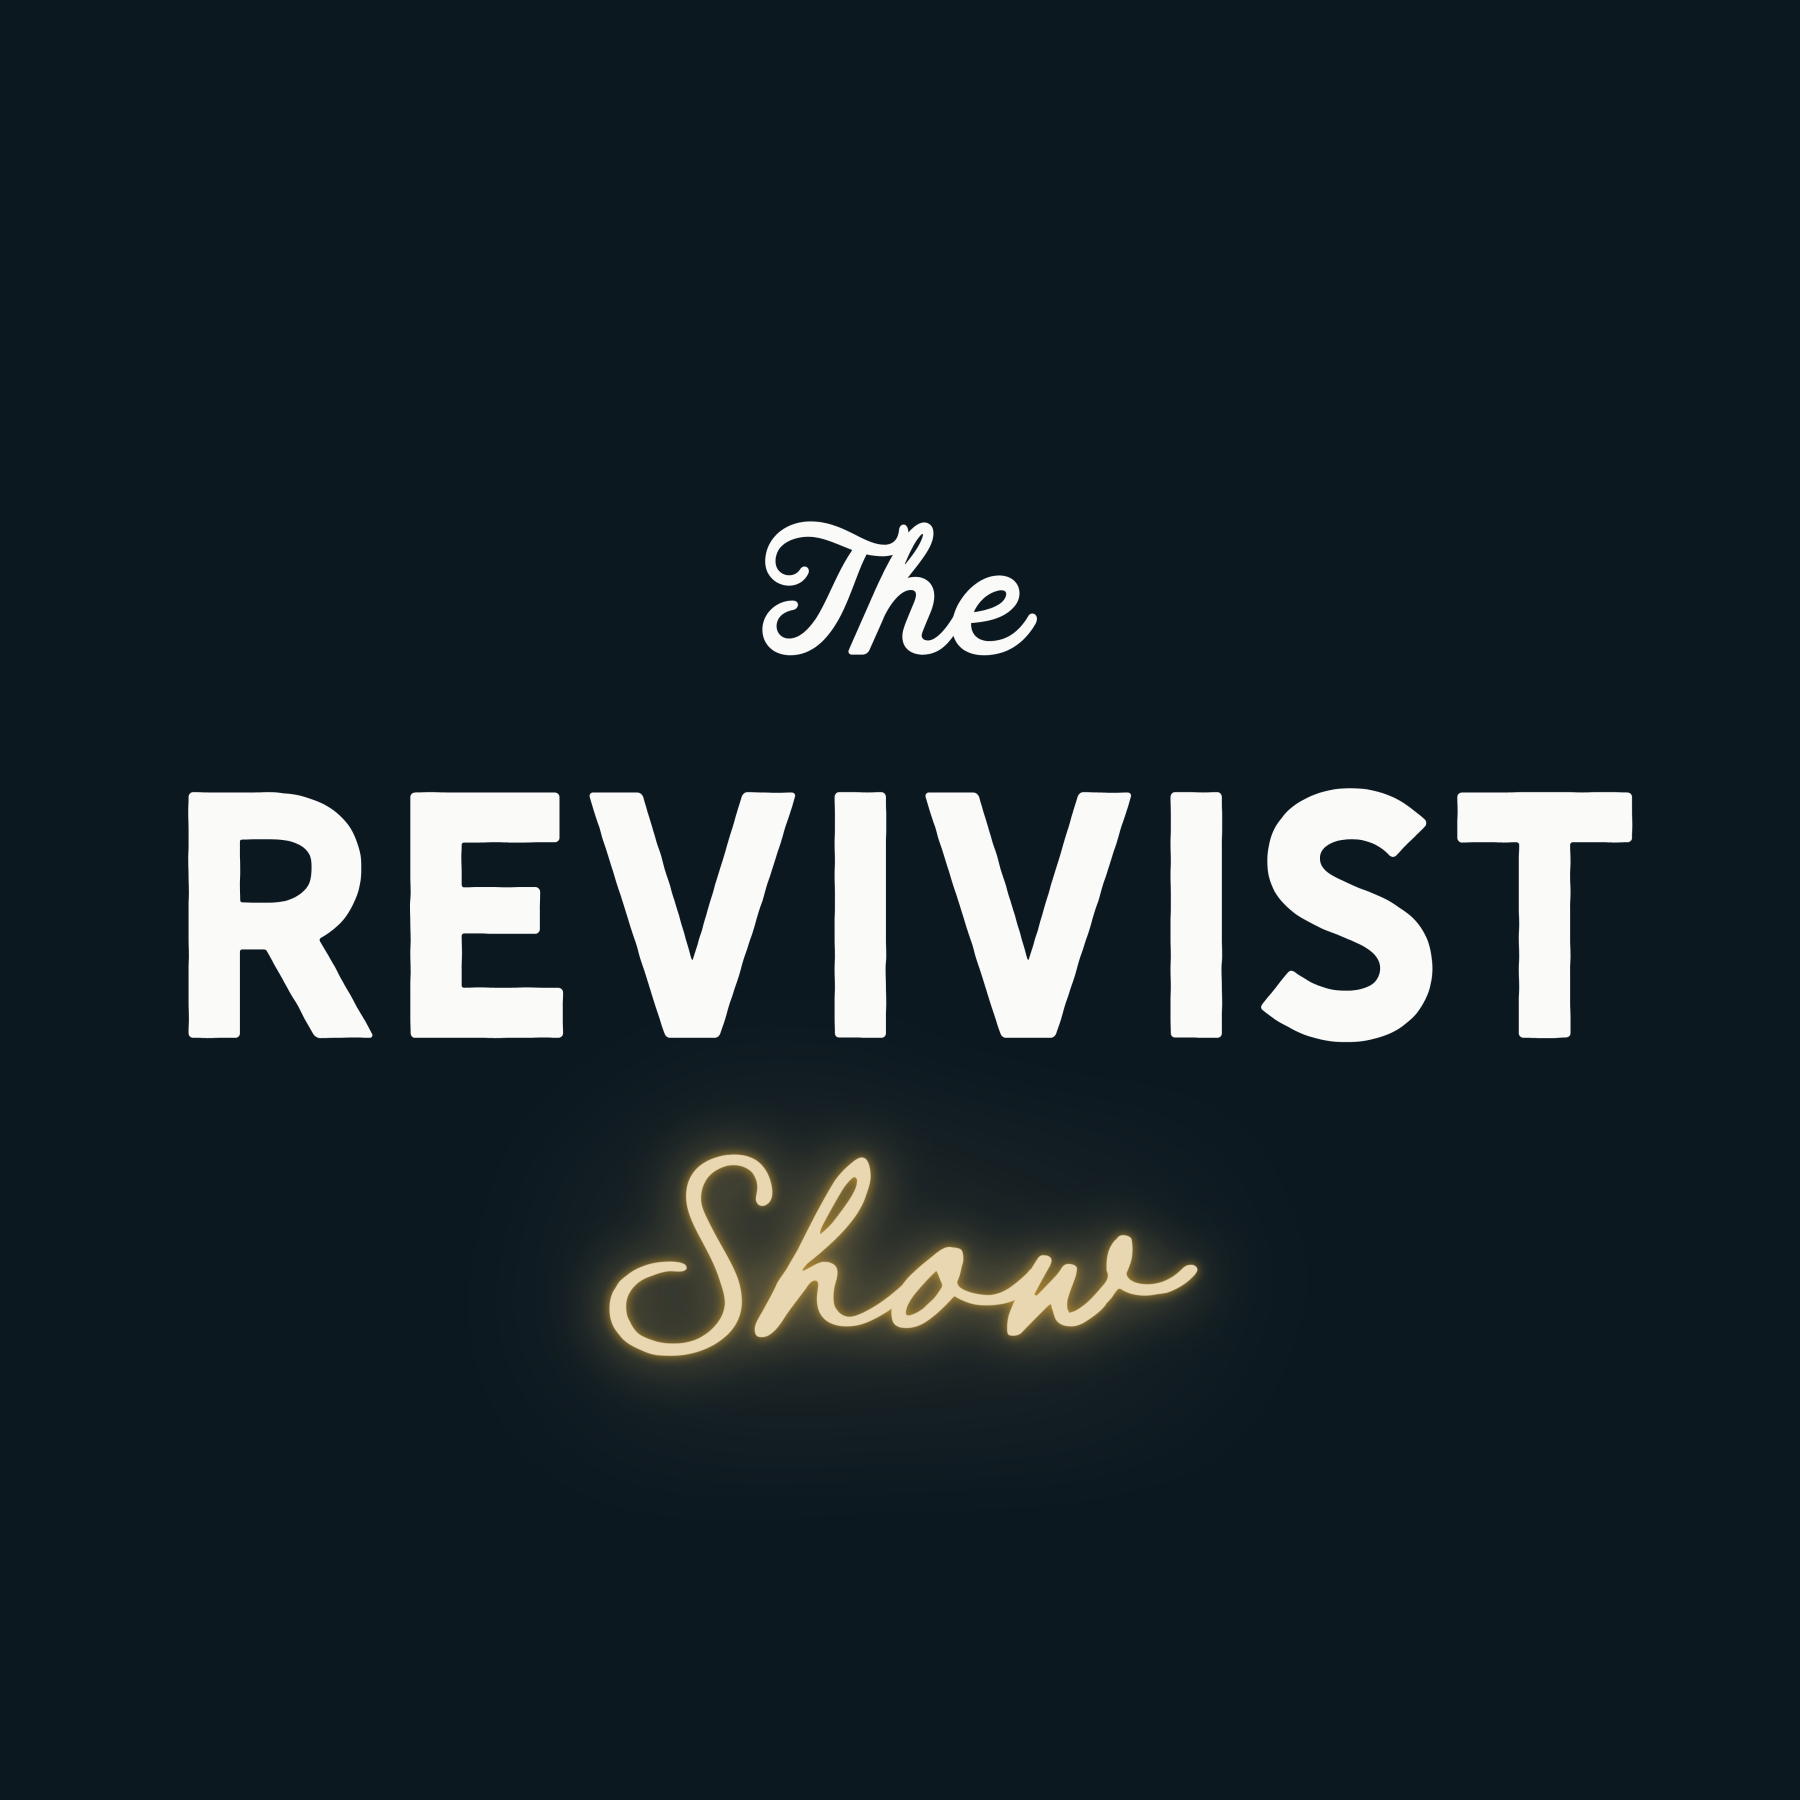 The Revivist Show Trailer